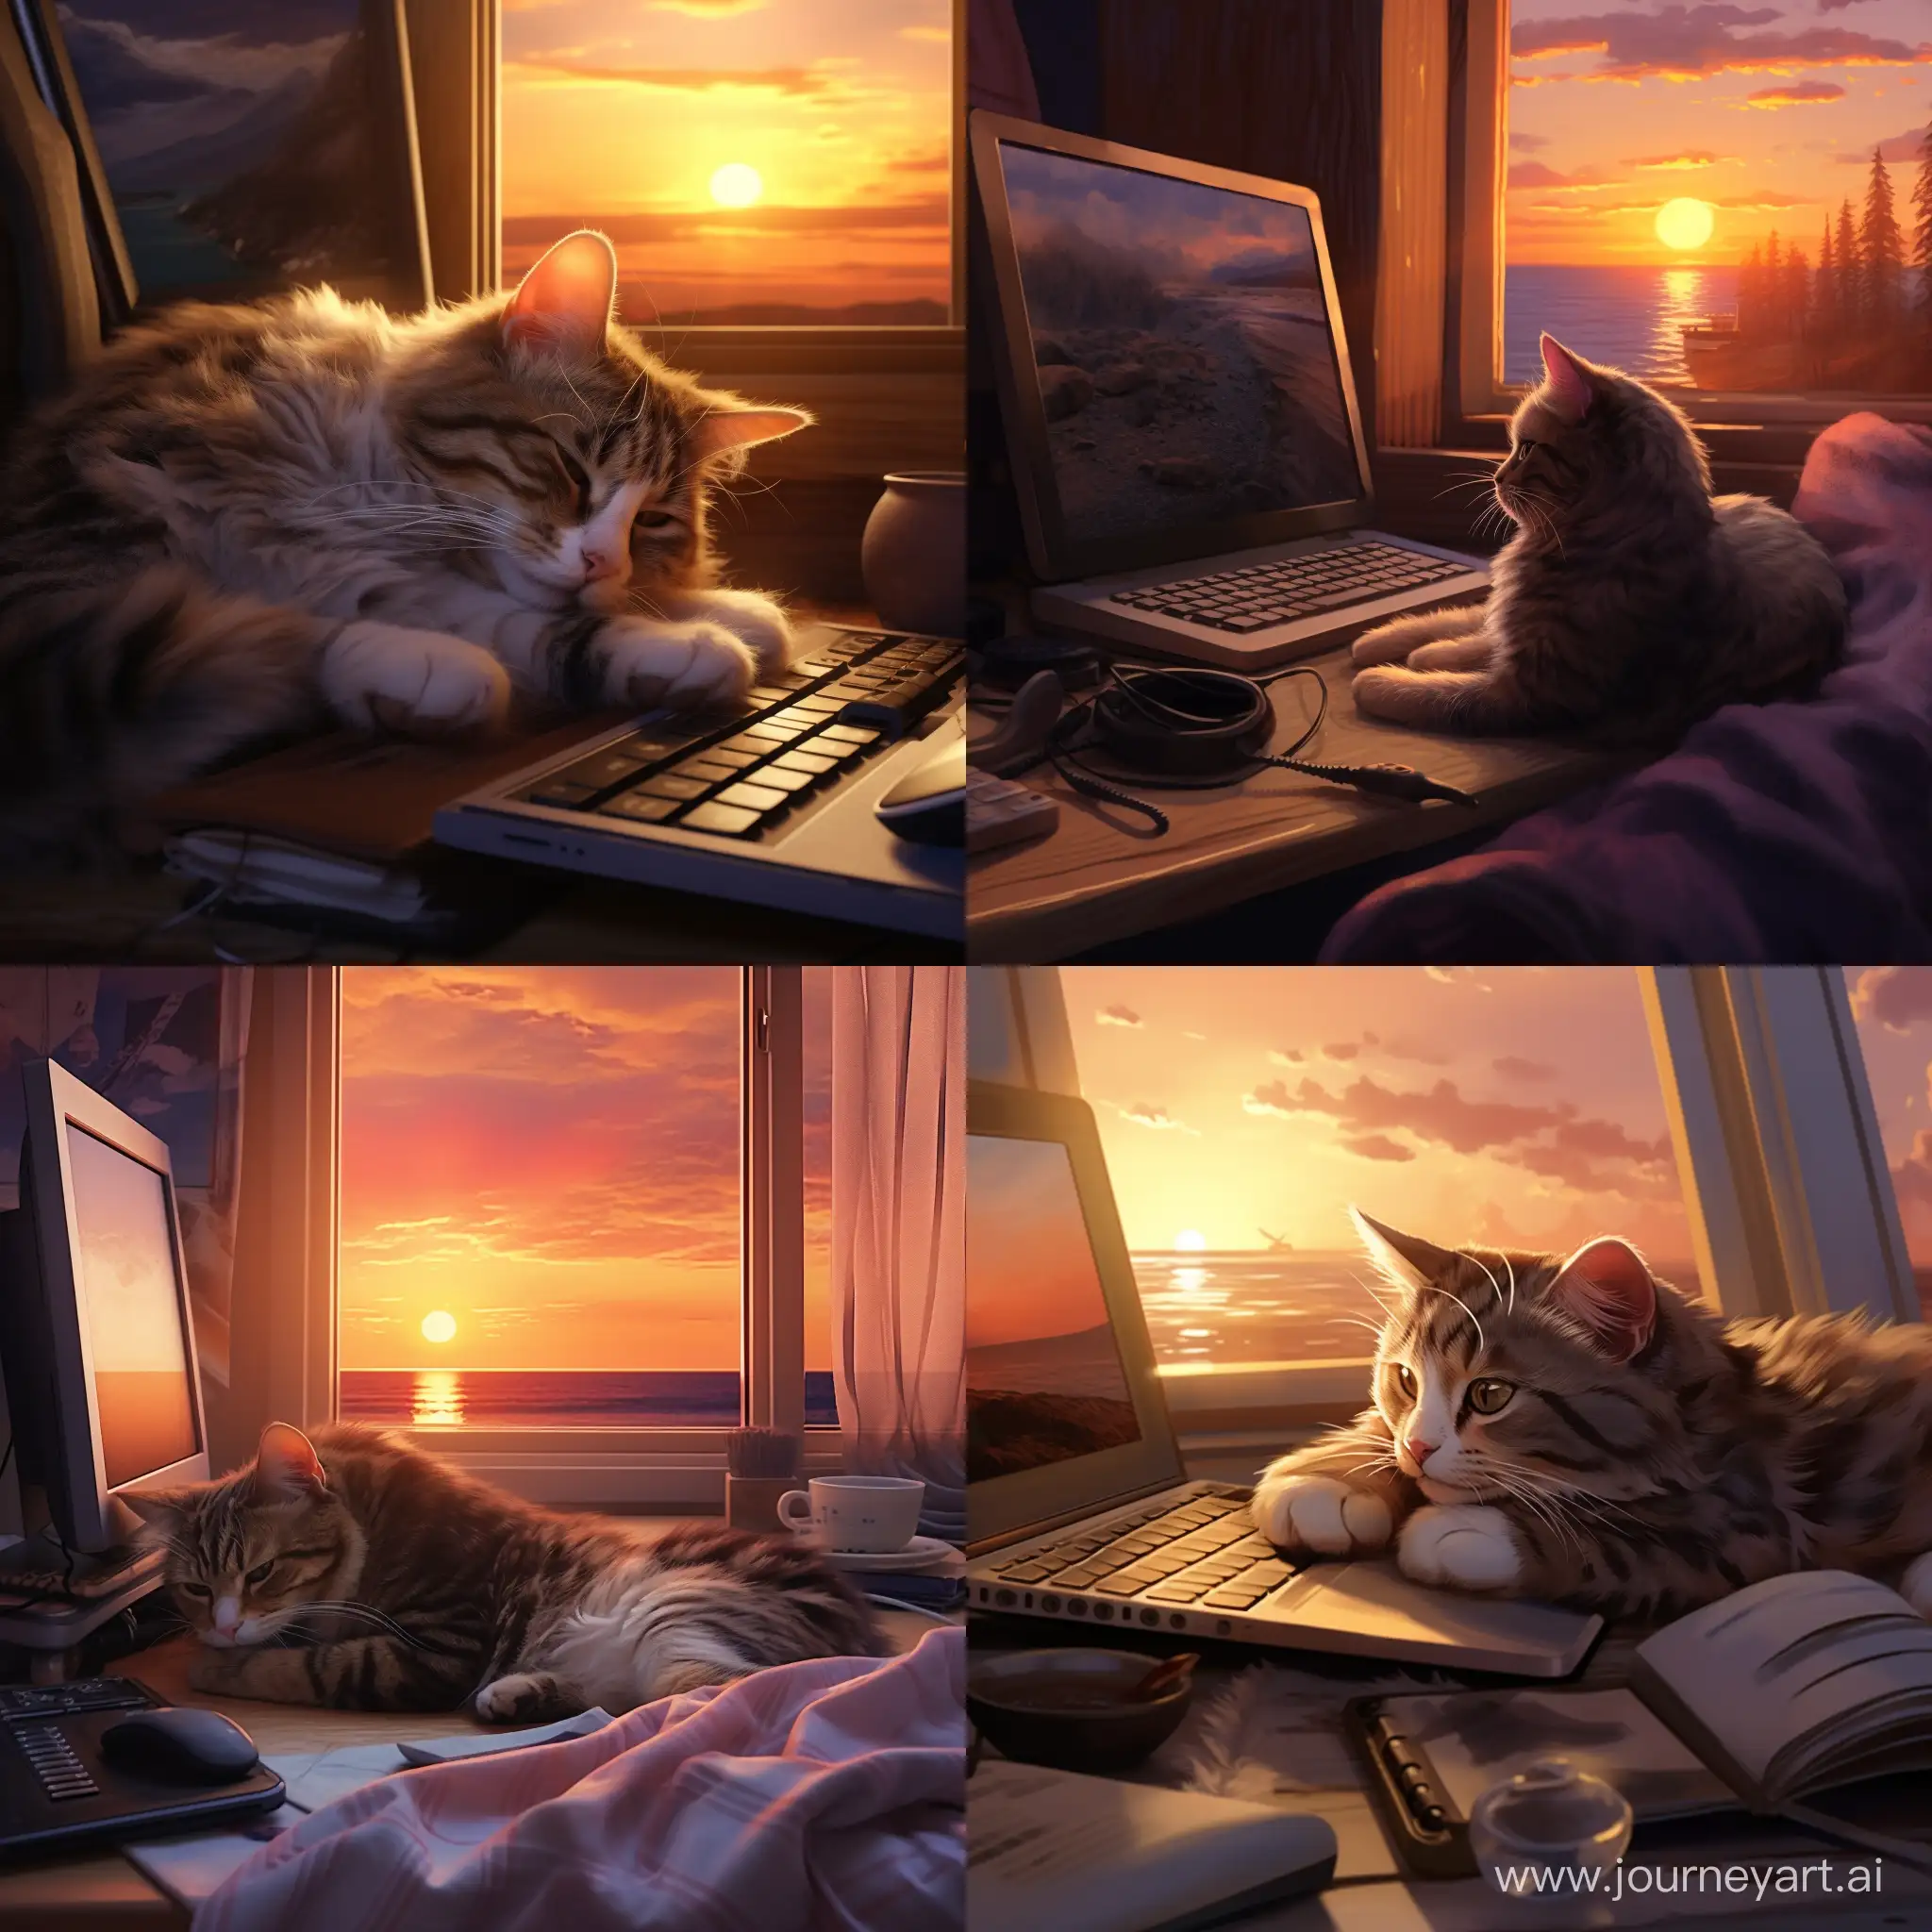 кот спит у компьютера на фоне заката